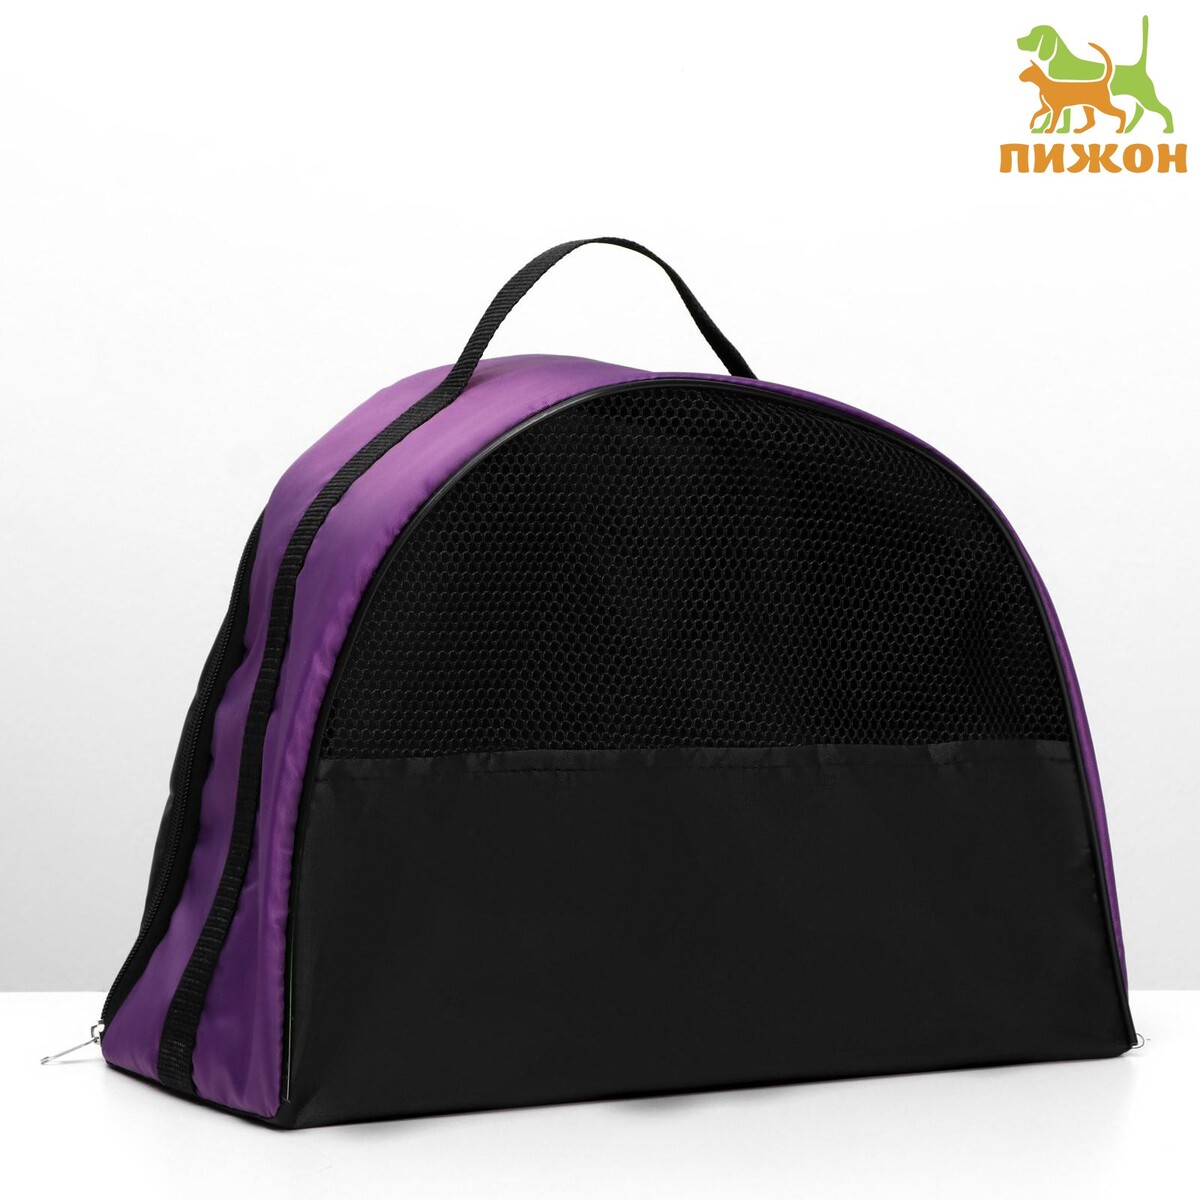 Сумка - переноска для животных, оксфорд, 39 х 19 х 27 см, фиолетовая сумка переноска для животных оксфорд 39 х 19 х 27 см фиолетовая